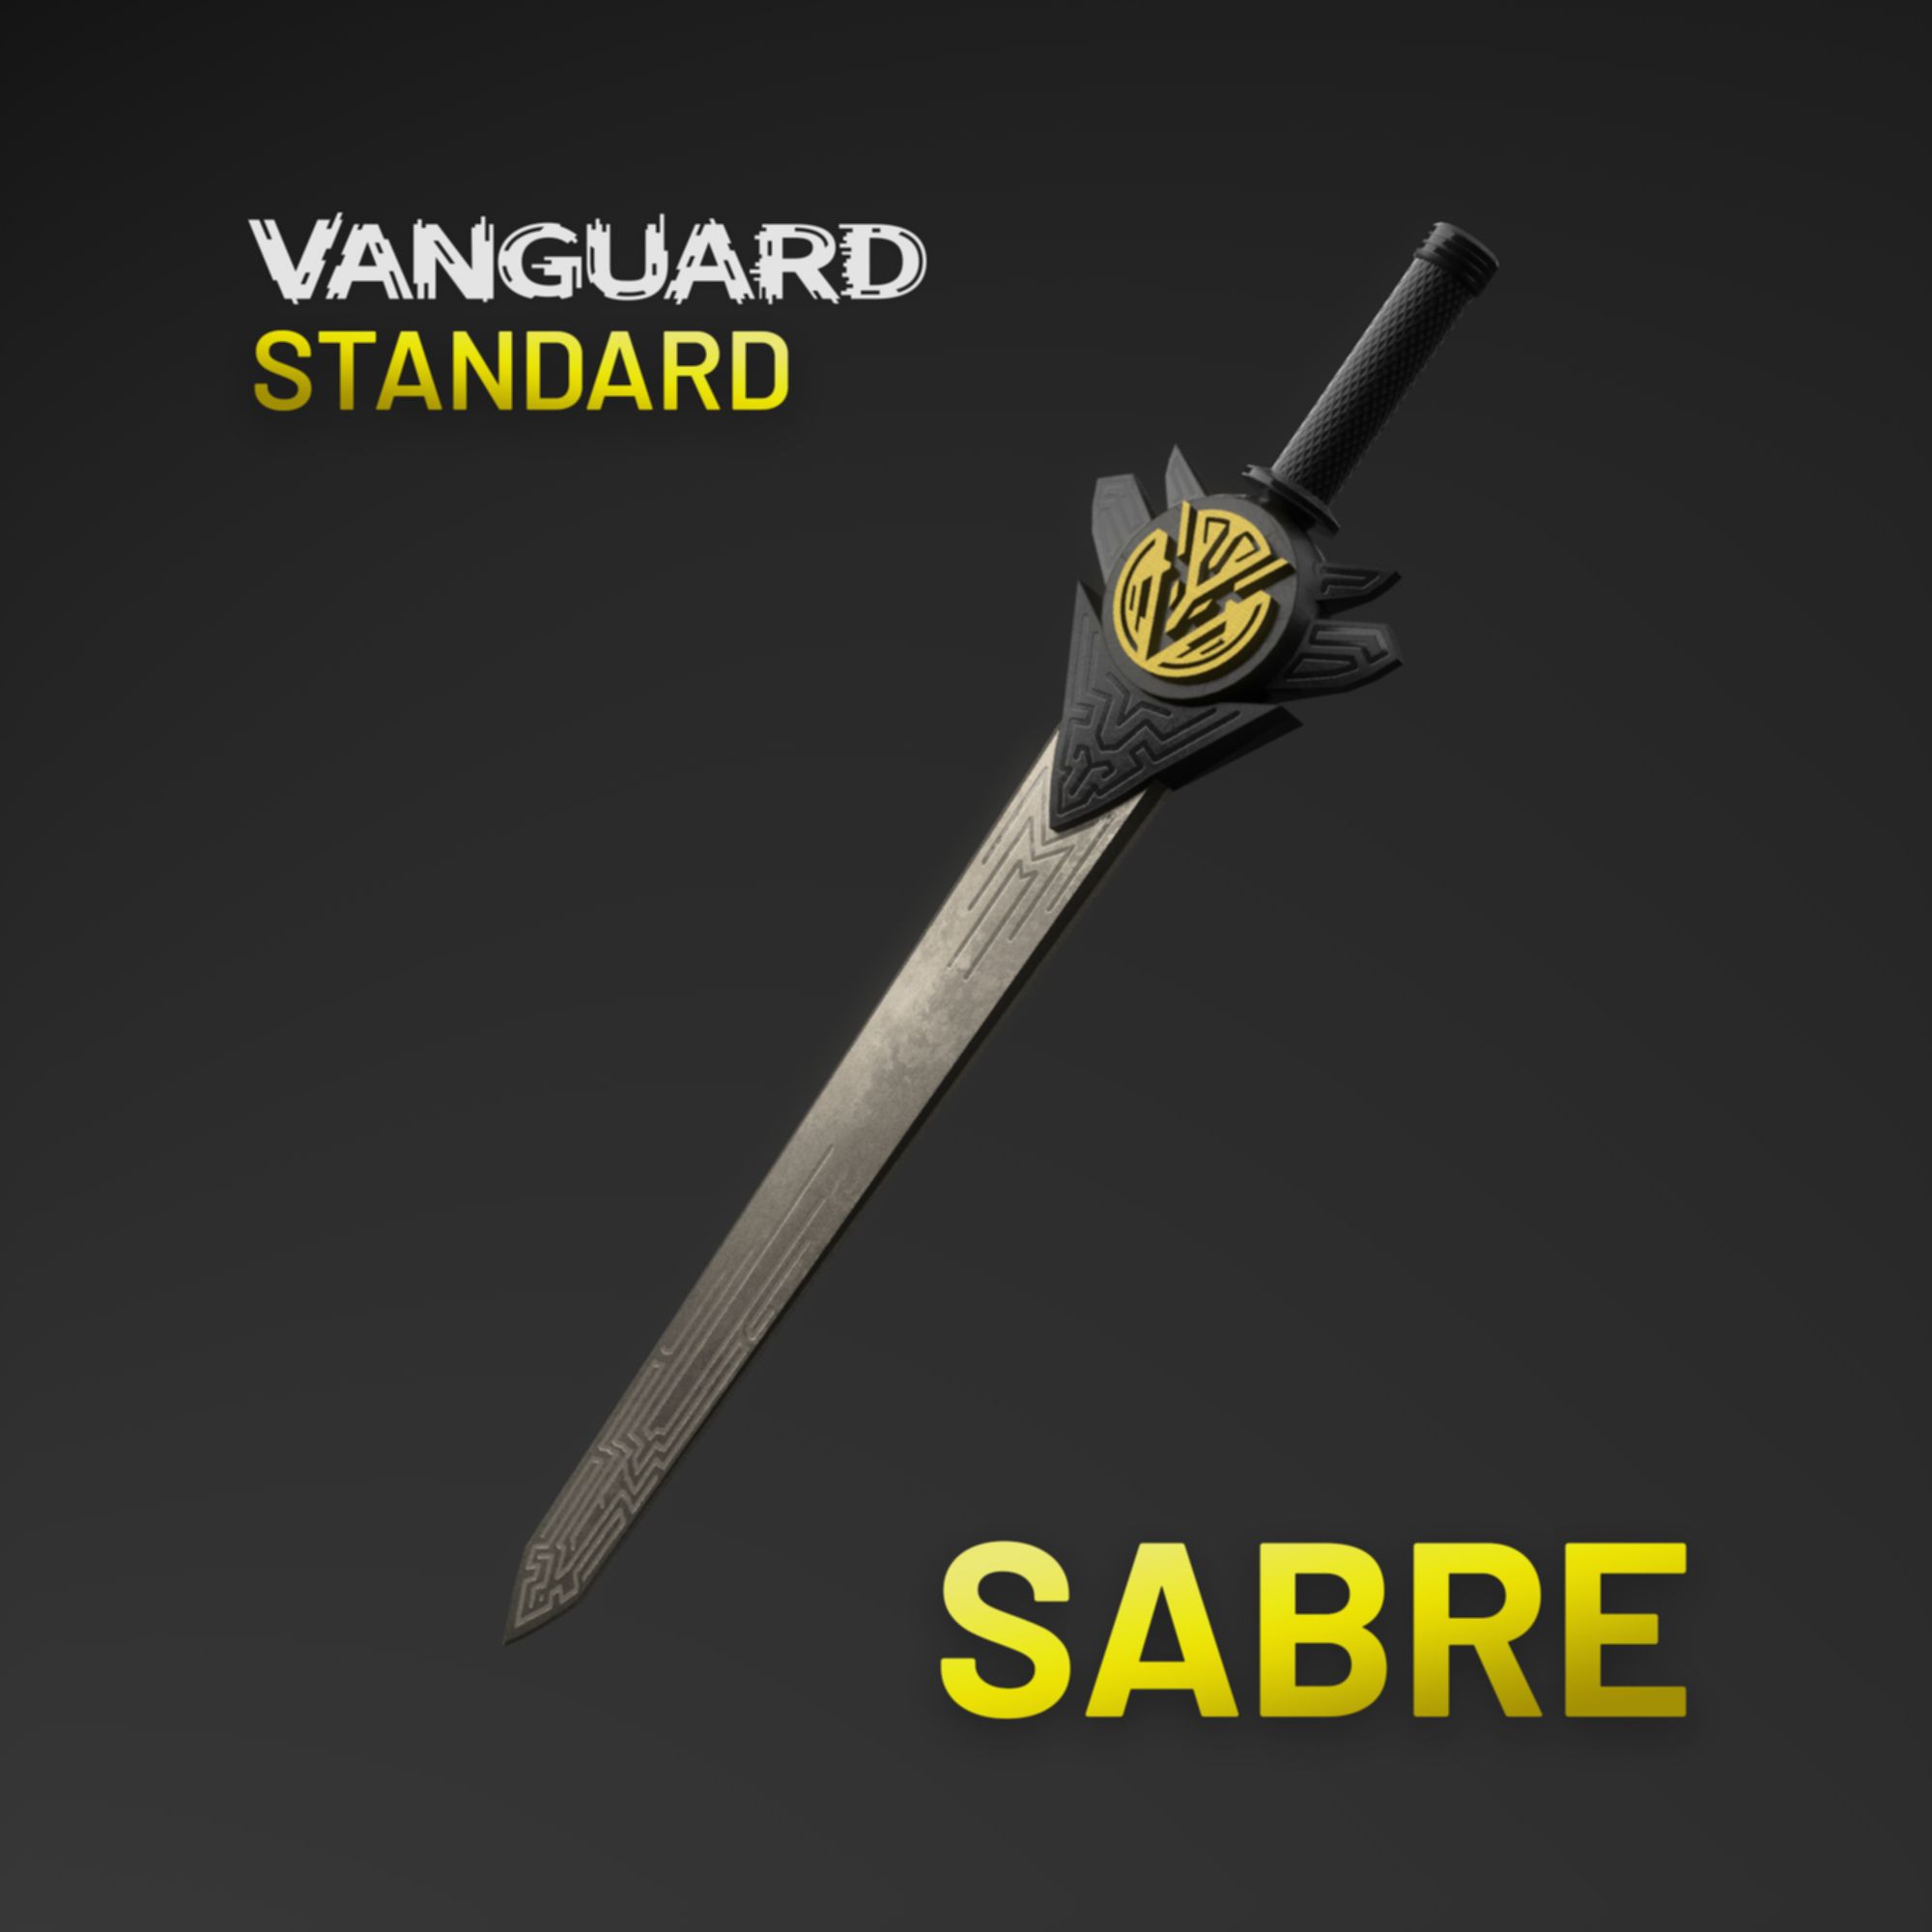 Vanguard Standard Sabre